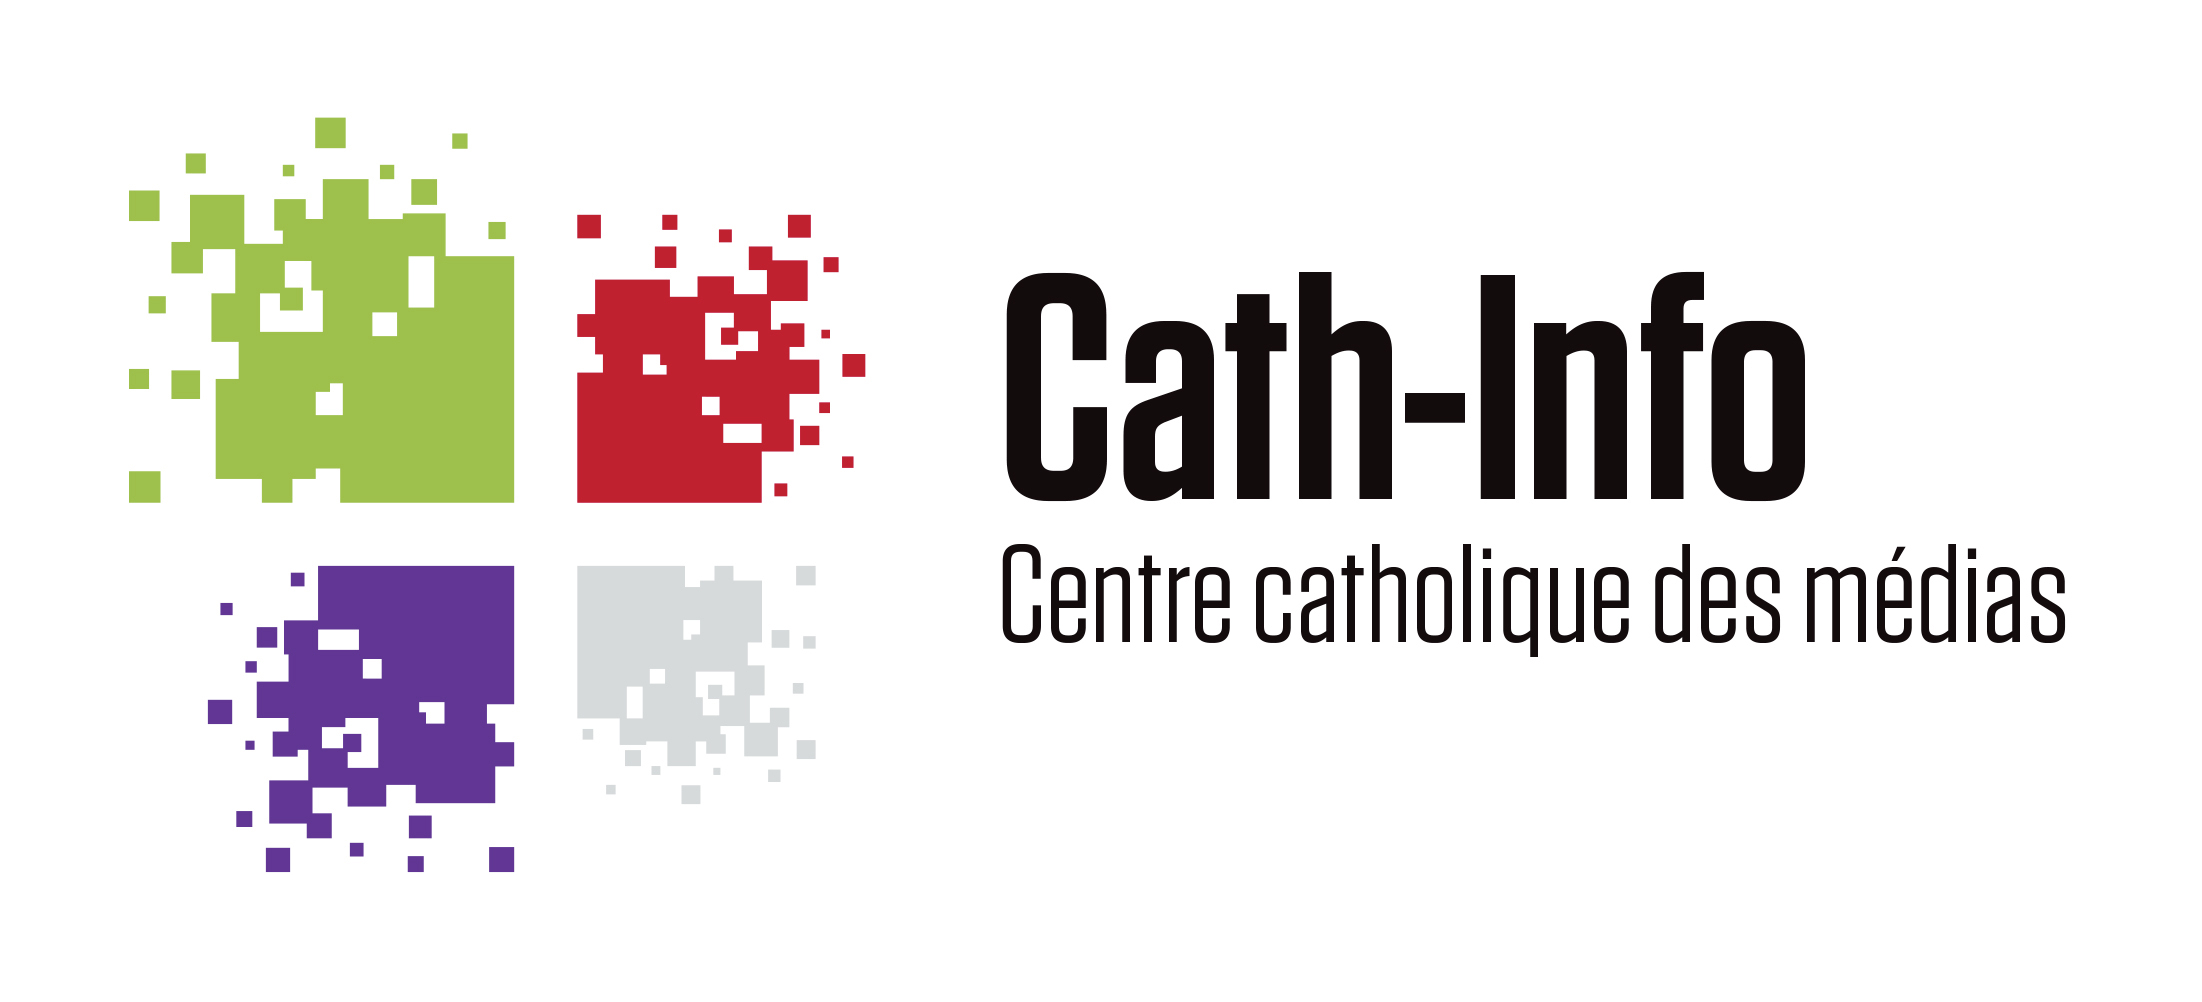 Cath-info